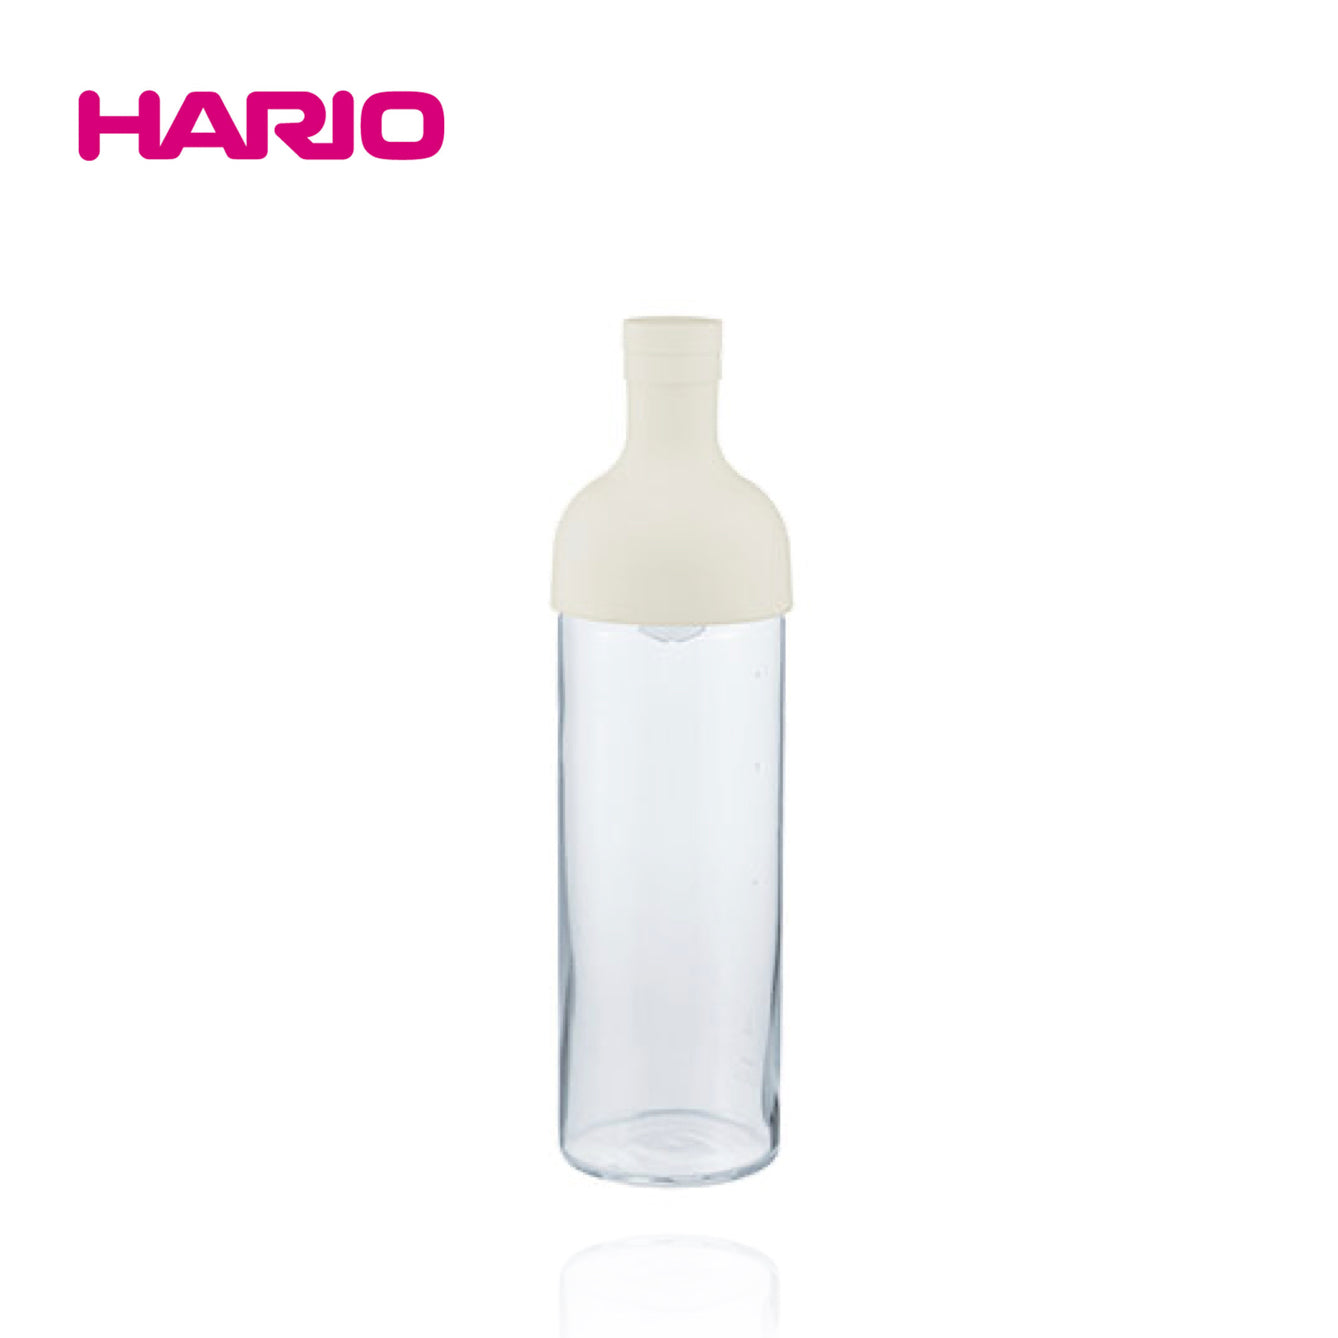 Hario Cold Brew Filter-in Tea Bottle white